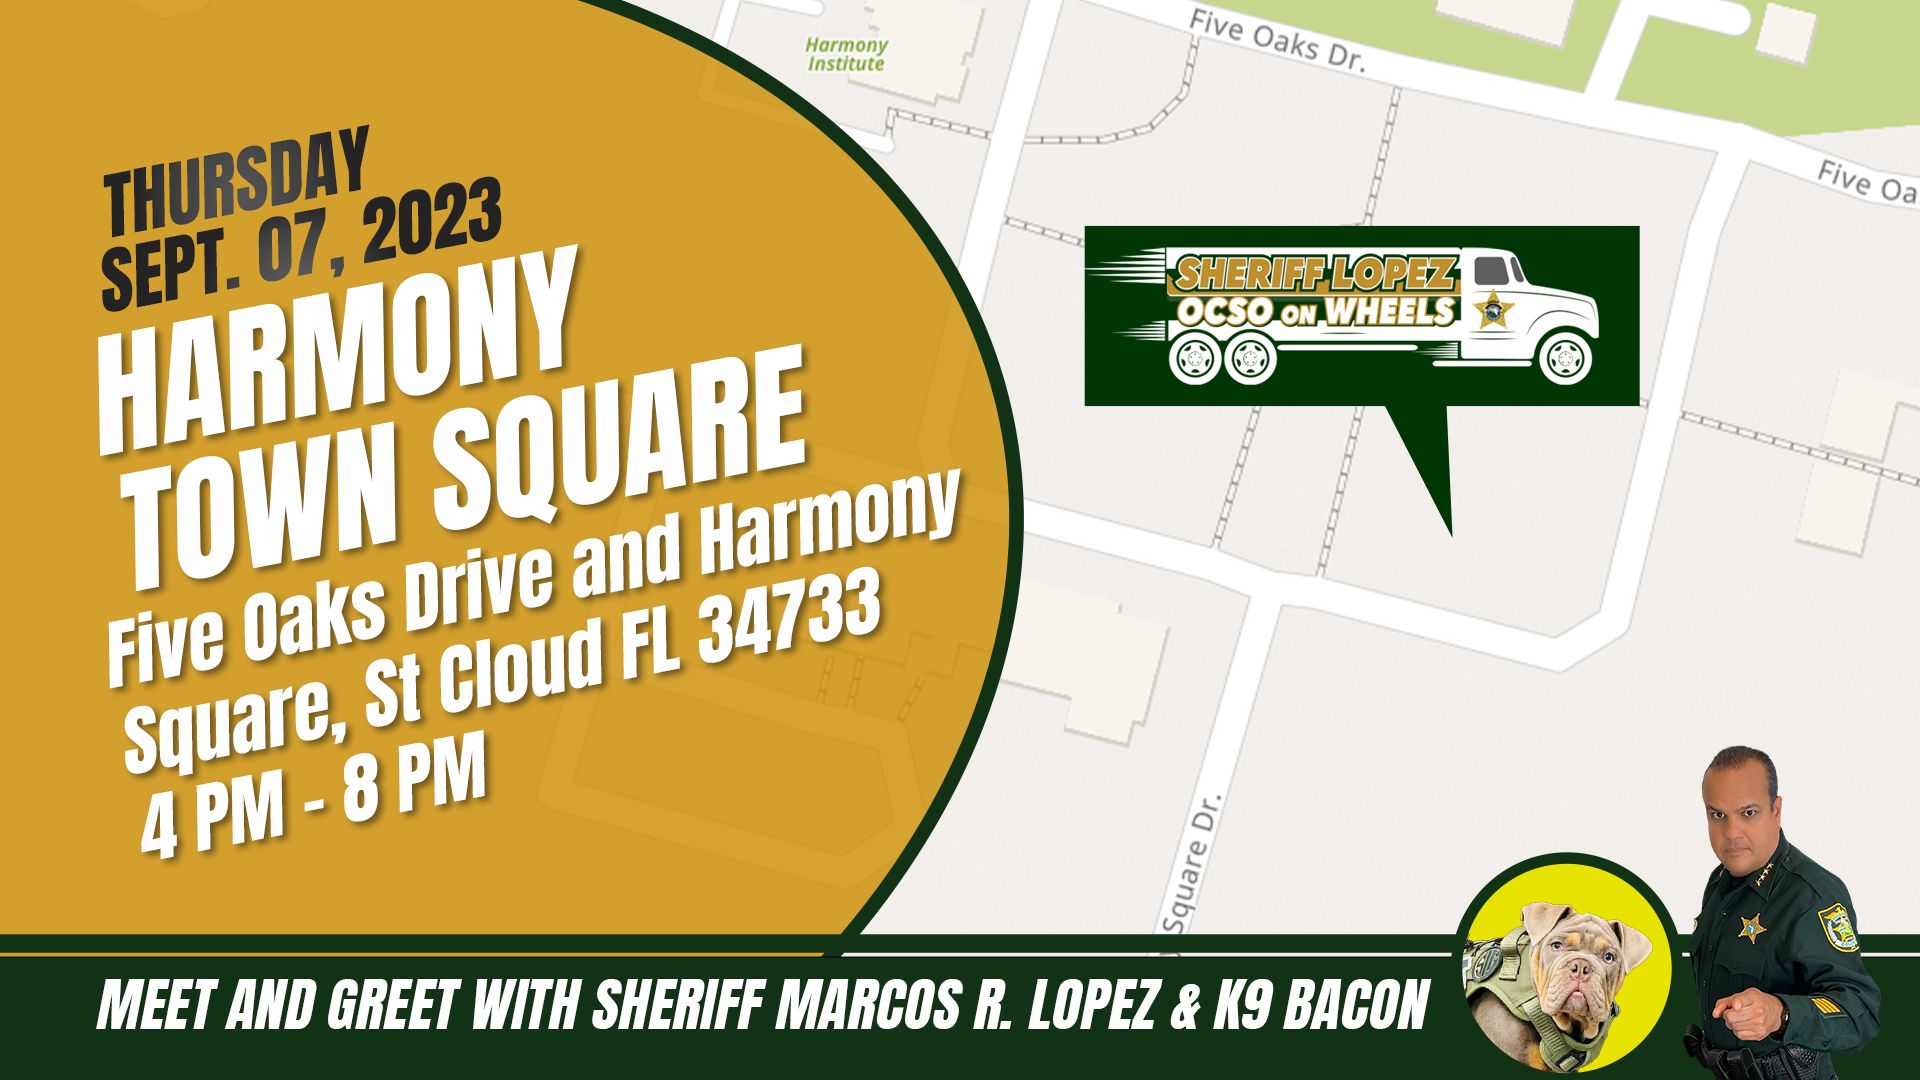 Harmony Town Square, Five Oaks Drive and Harmony Square, St Cloud (Harmony), Florida 34773